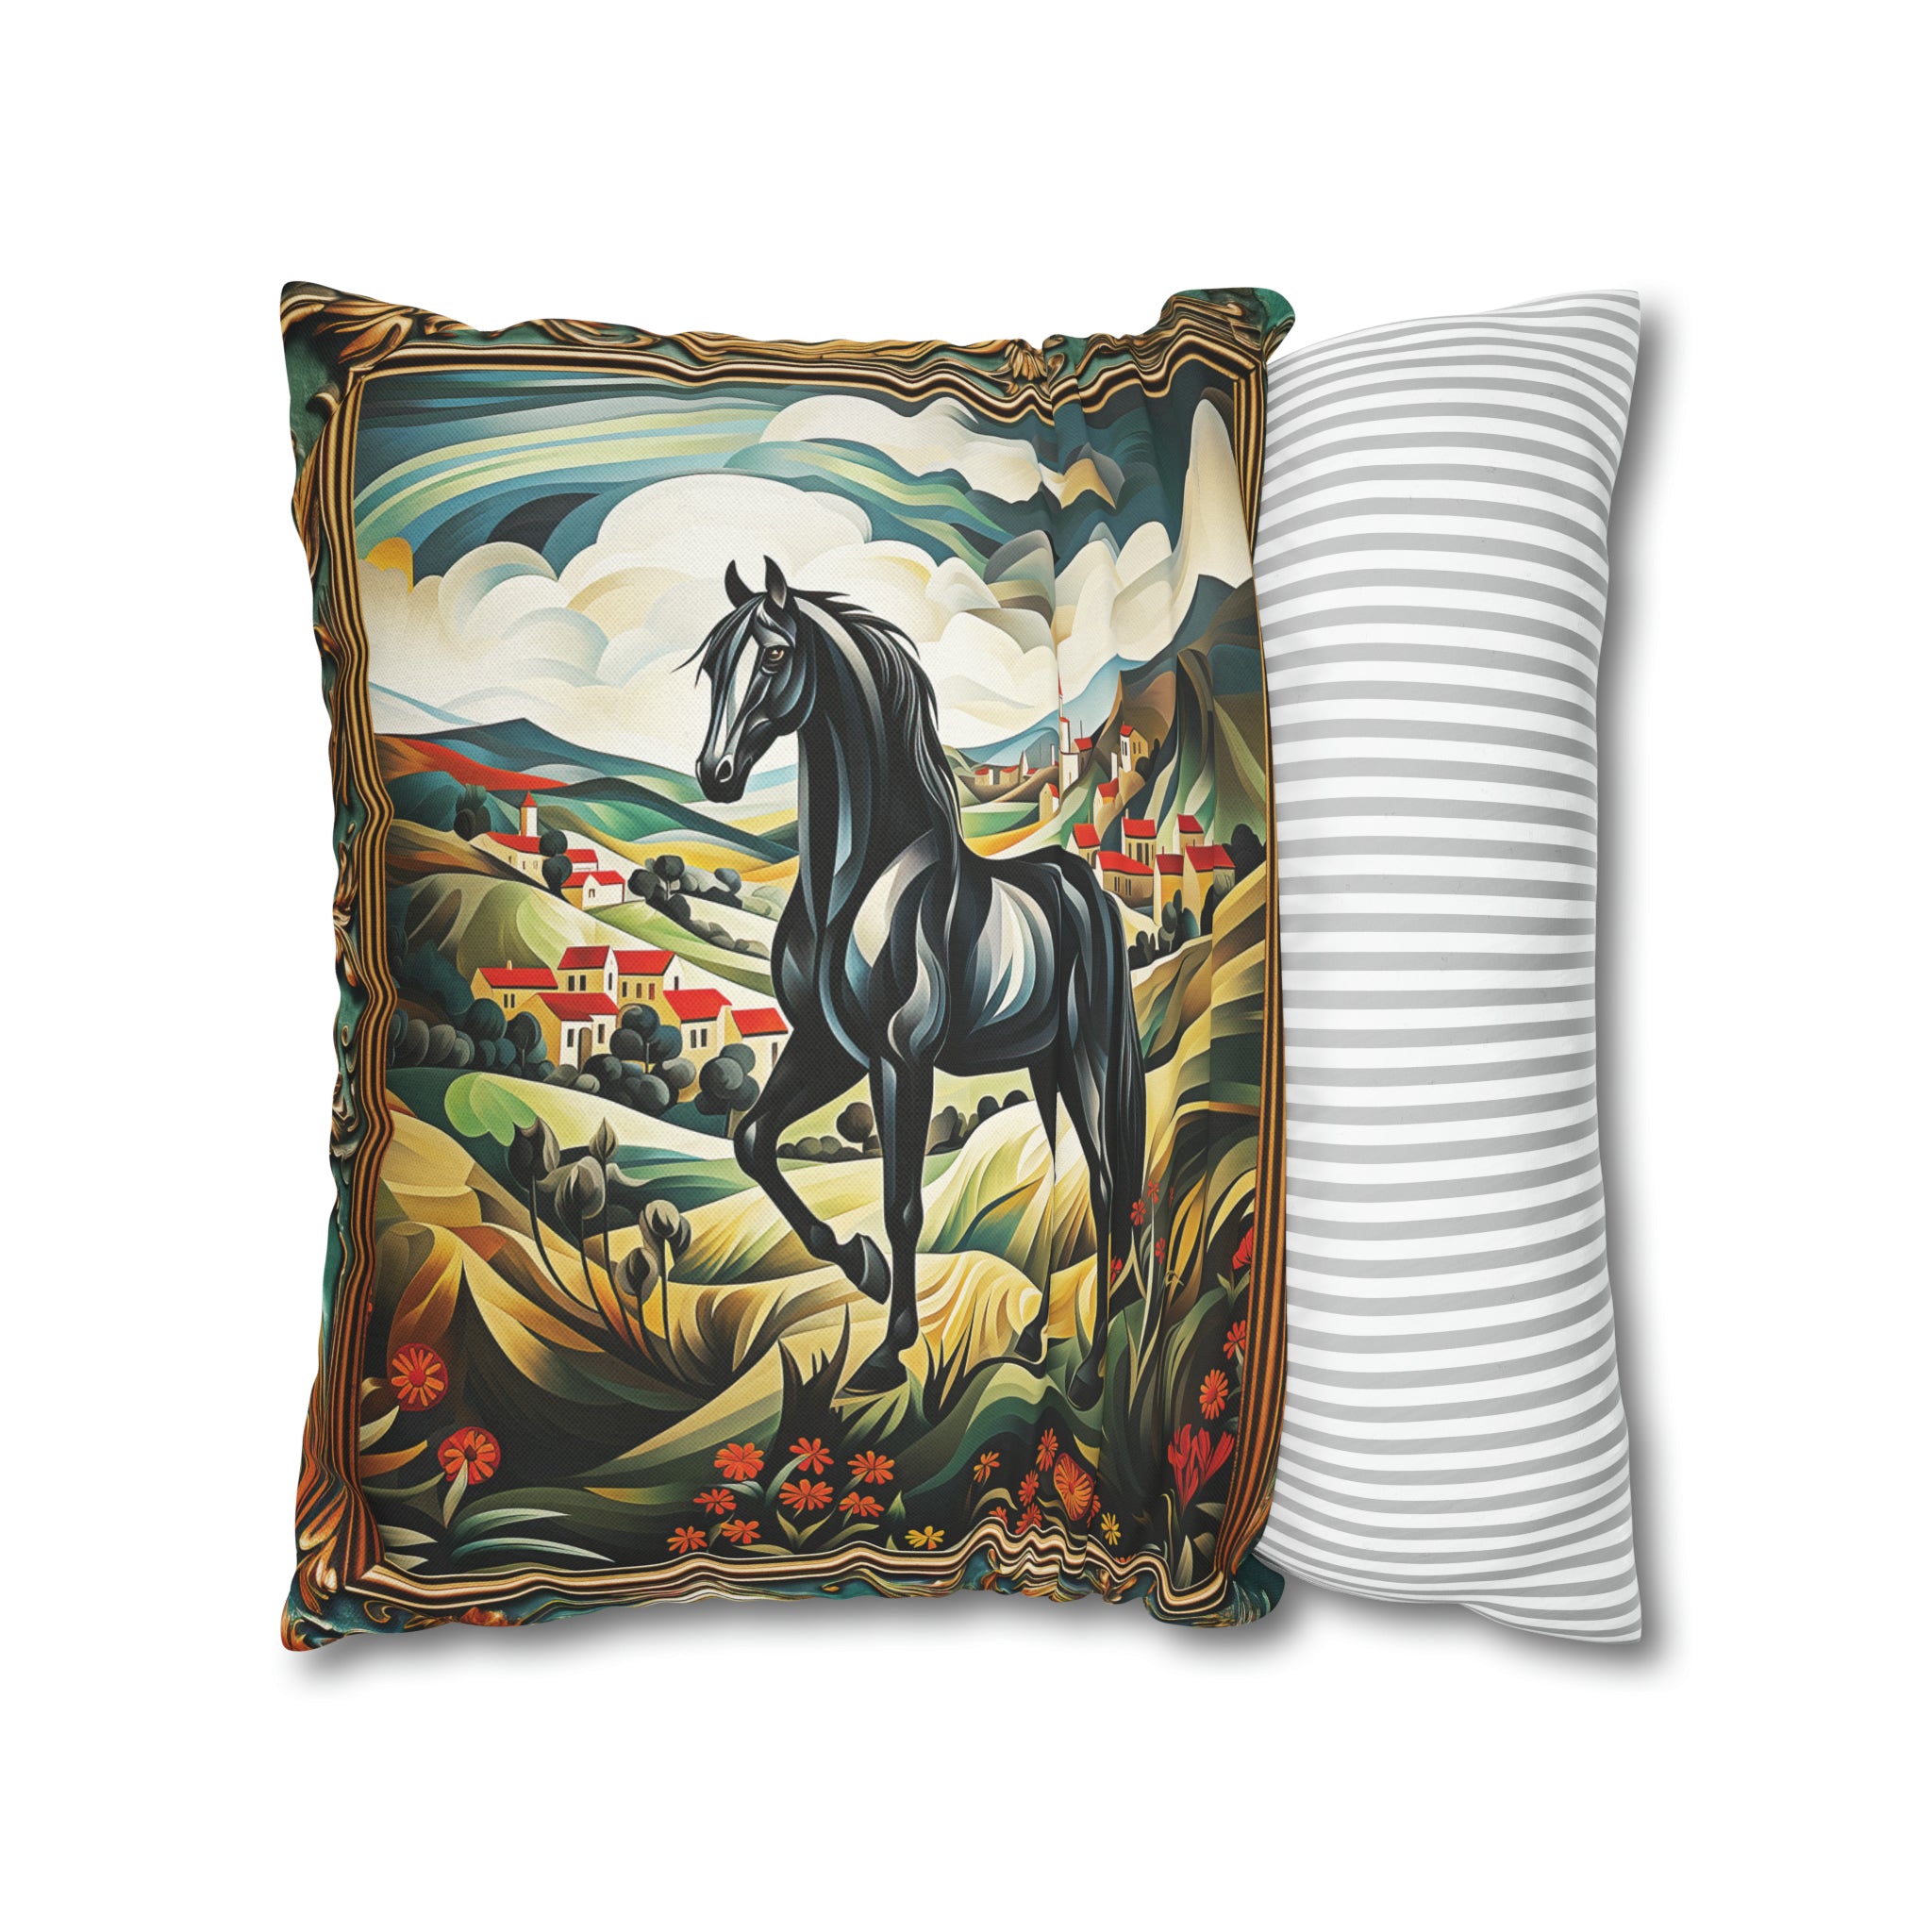 Square Pillow Case 18" x 18", CASE ONLY, no pillow form, original Art ,Colorful, Beautiful Black Stallion on a Spanish Landscape